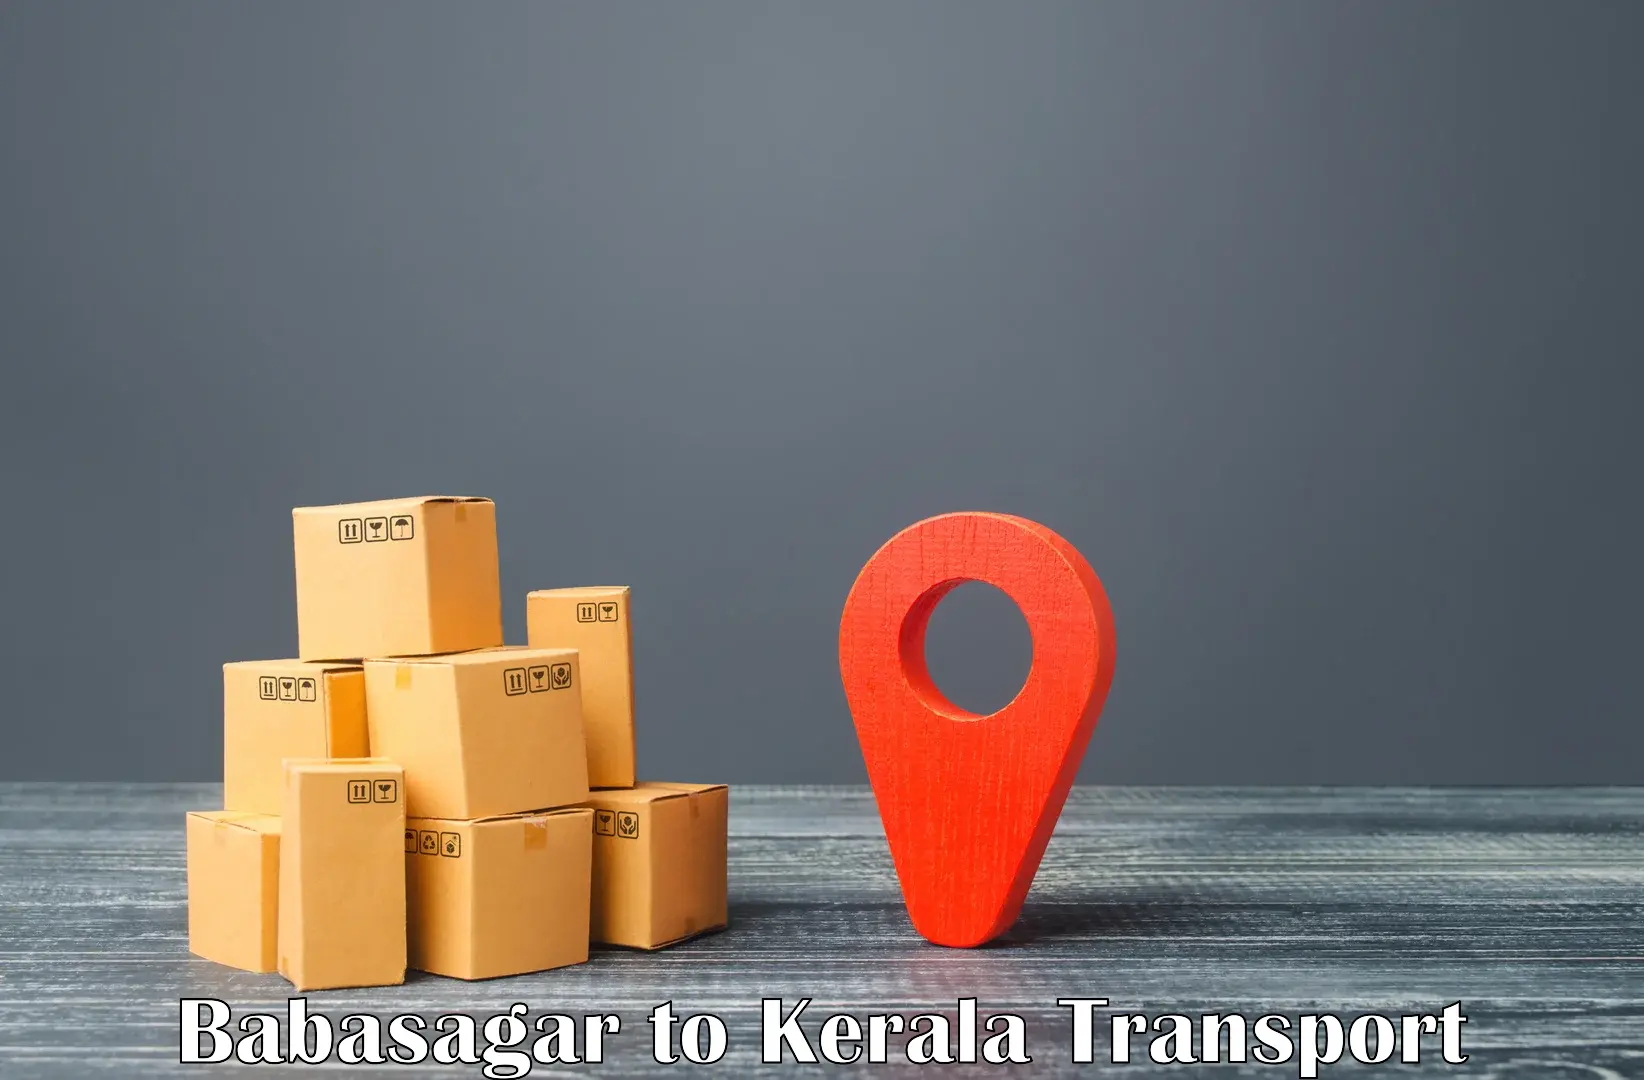 Nearest transport service in Babasagar to Trivandrum